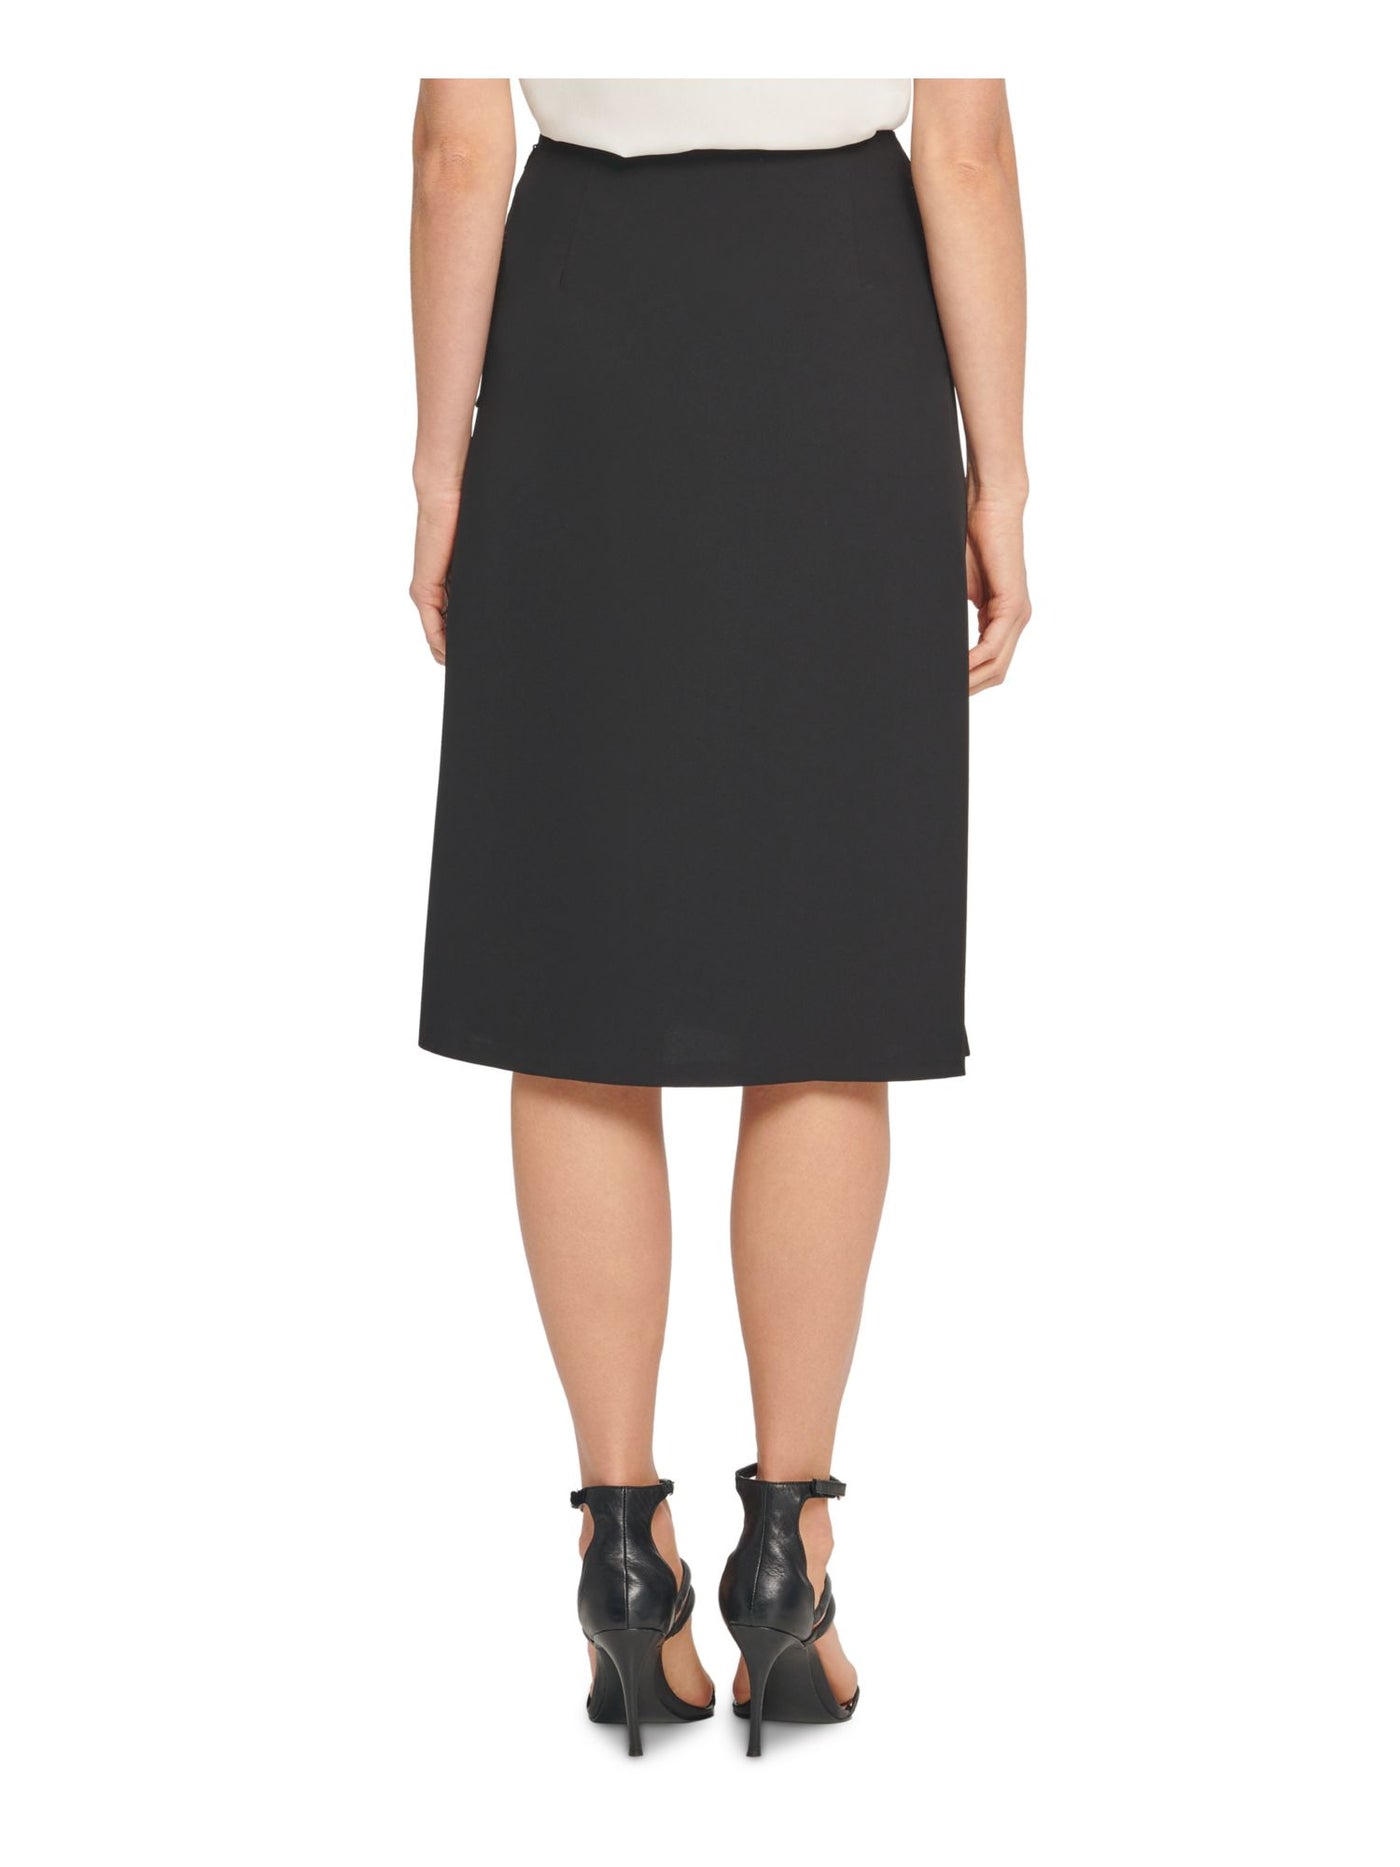 DKNY Womens Black Ruffled Below The Knee A-Line Skirt Size: 0